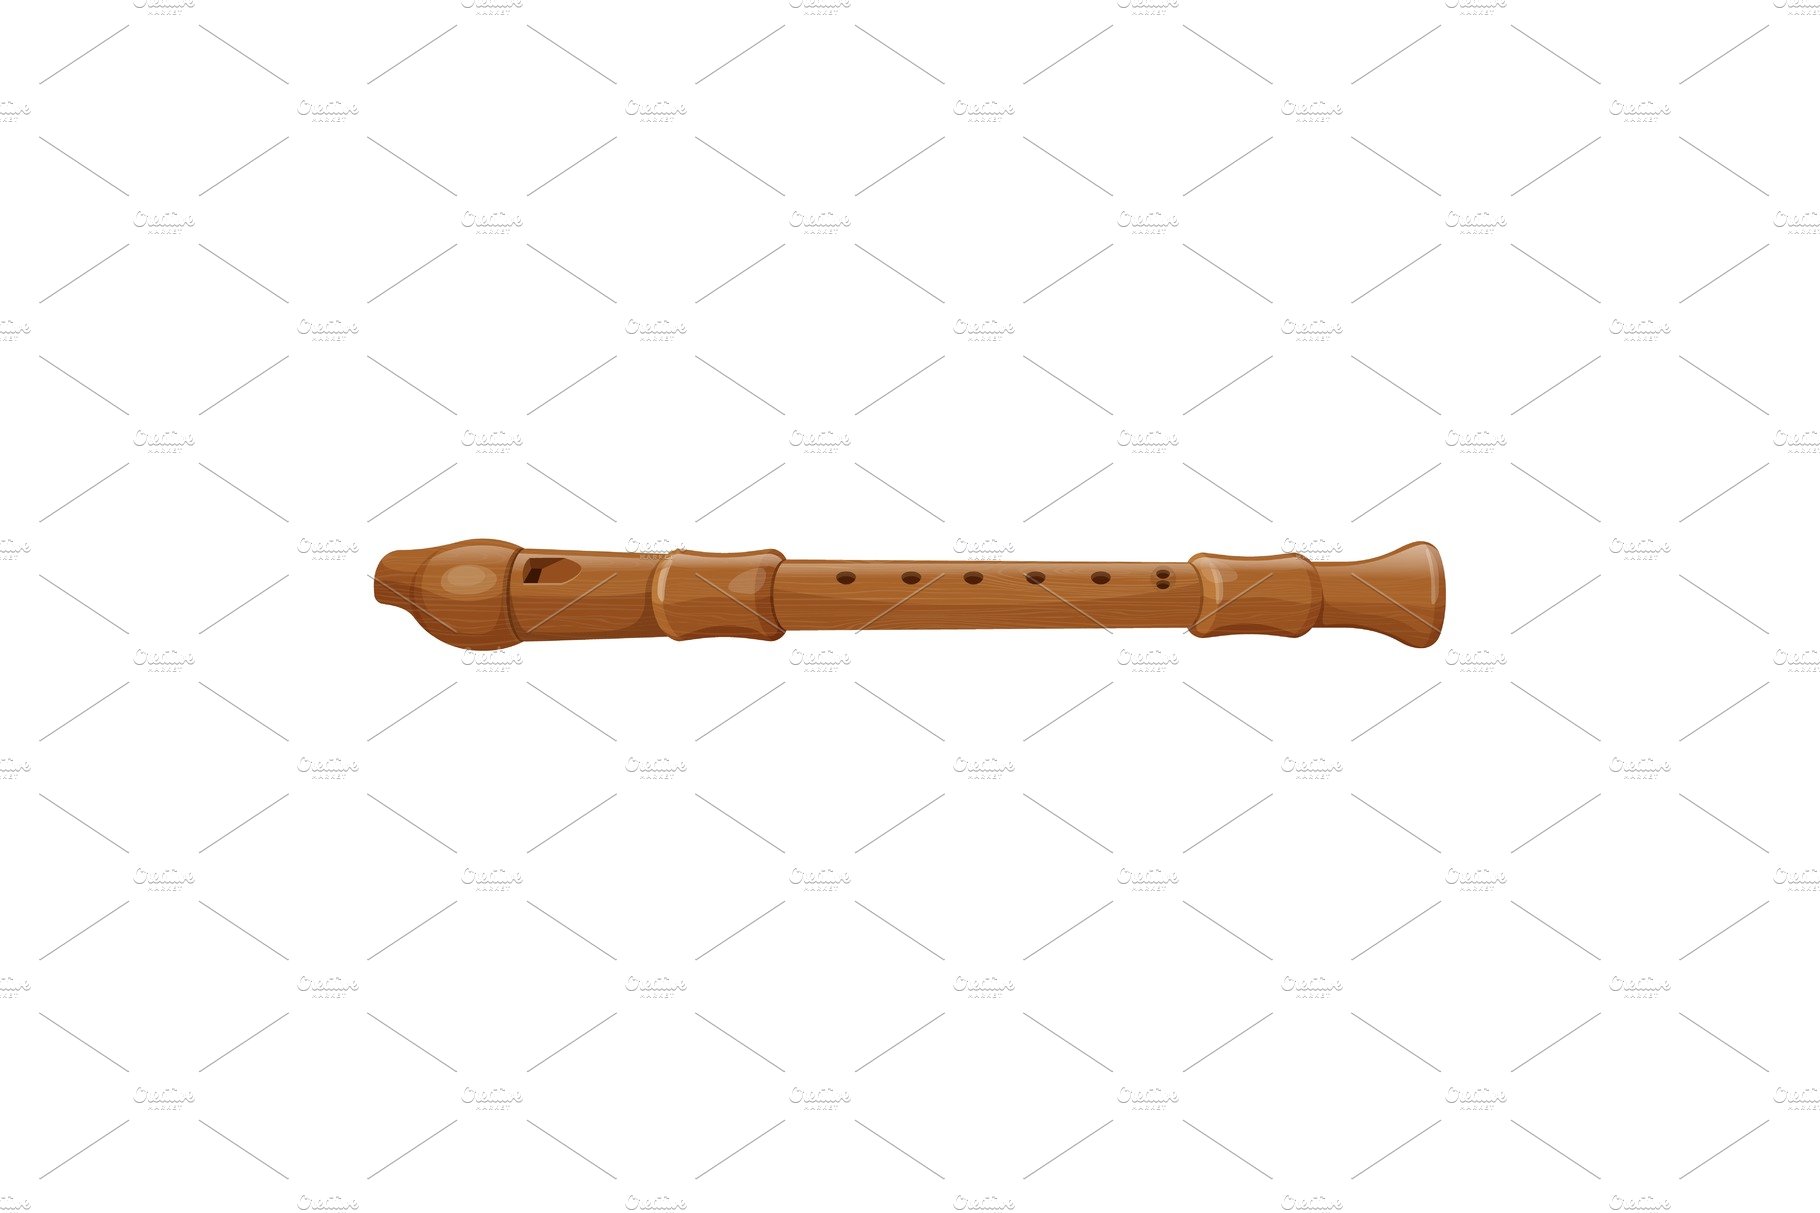 Wooden flute flat illustration in cover image.